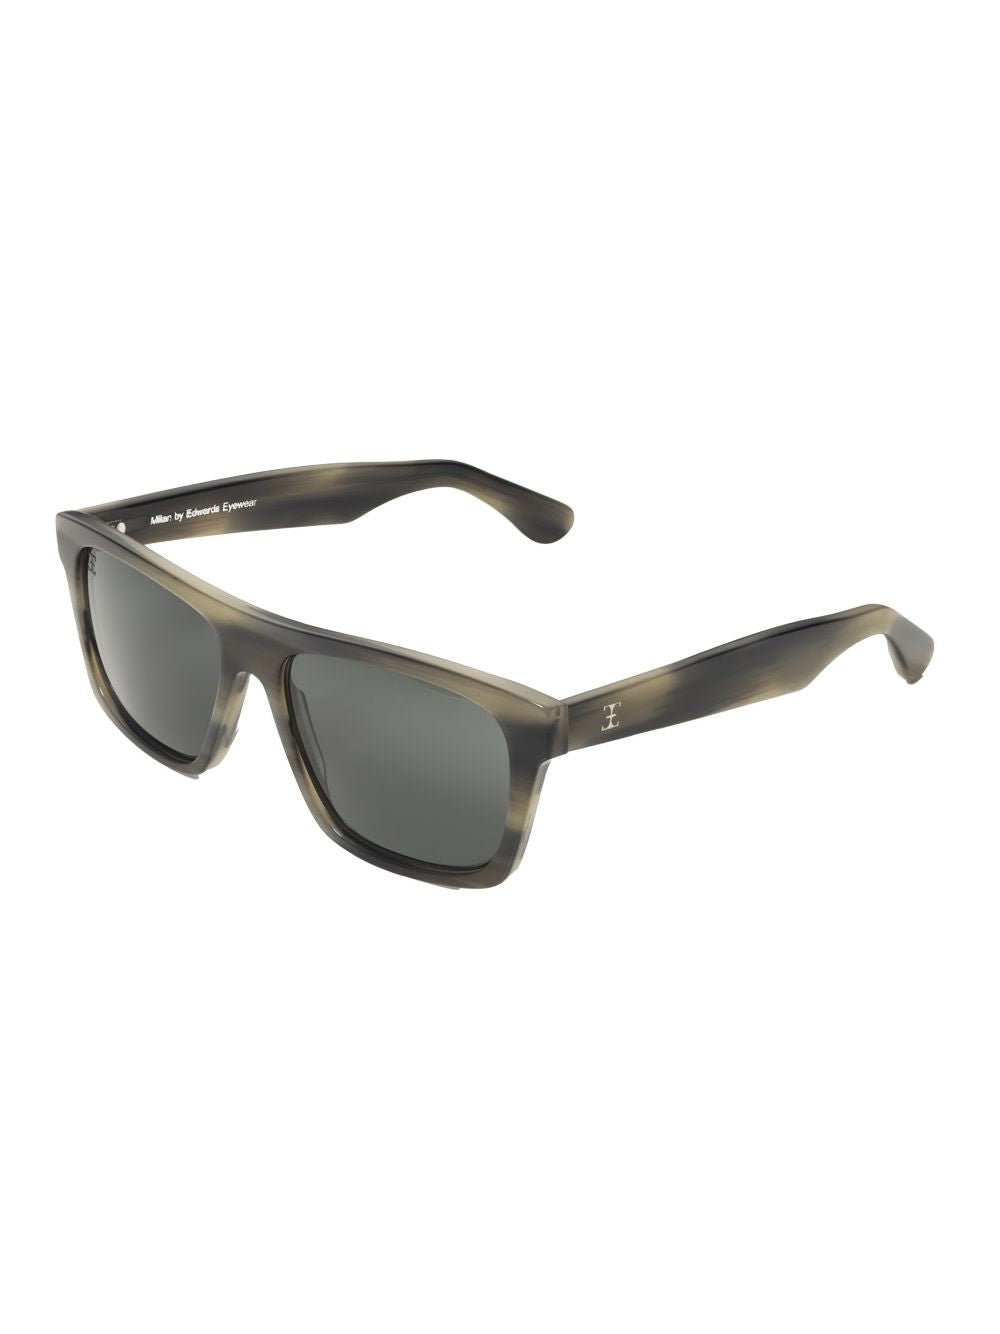 Milan Sunglasses by Edwards Eyewear Grey horn/grey polar